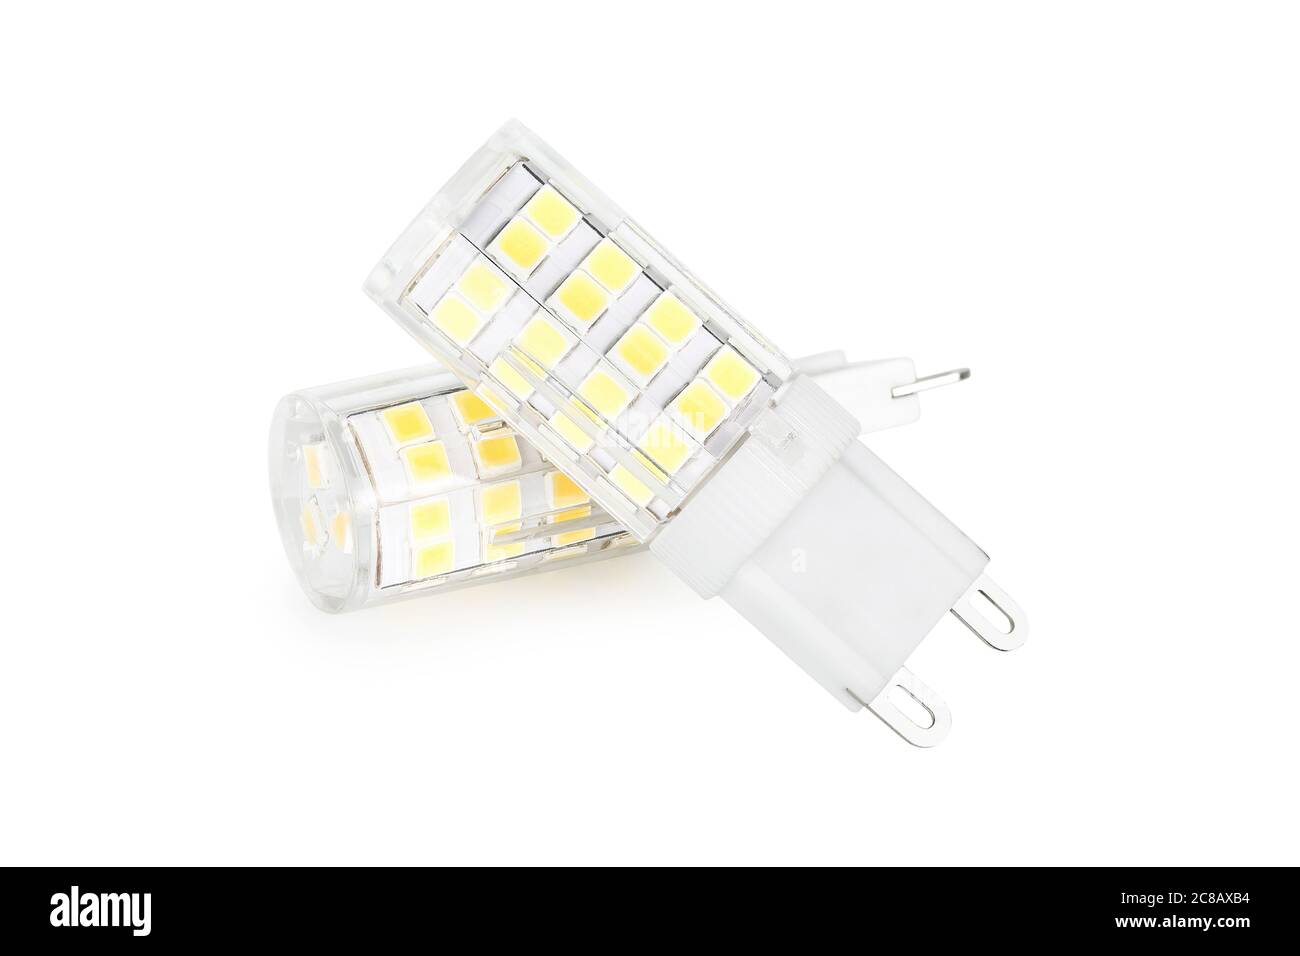 led lamps isolated on white Stock Photo